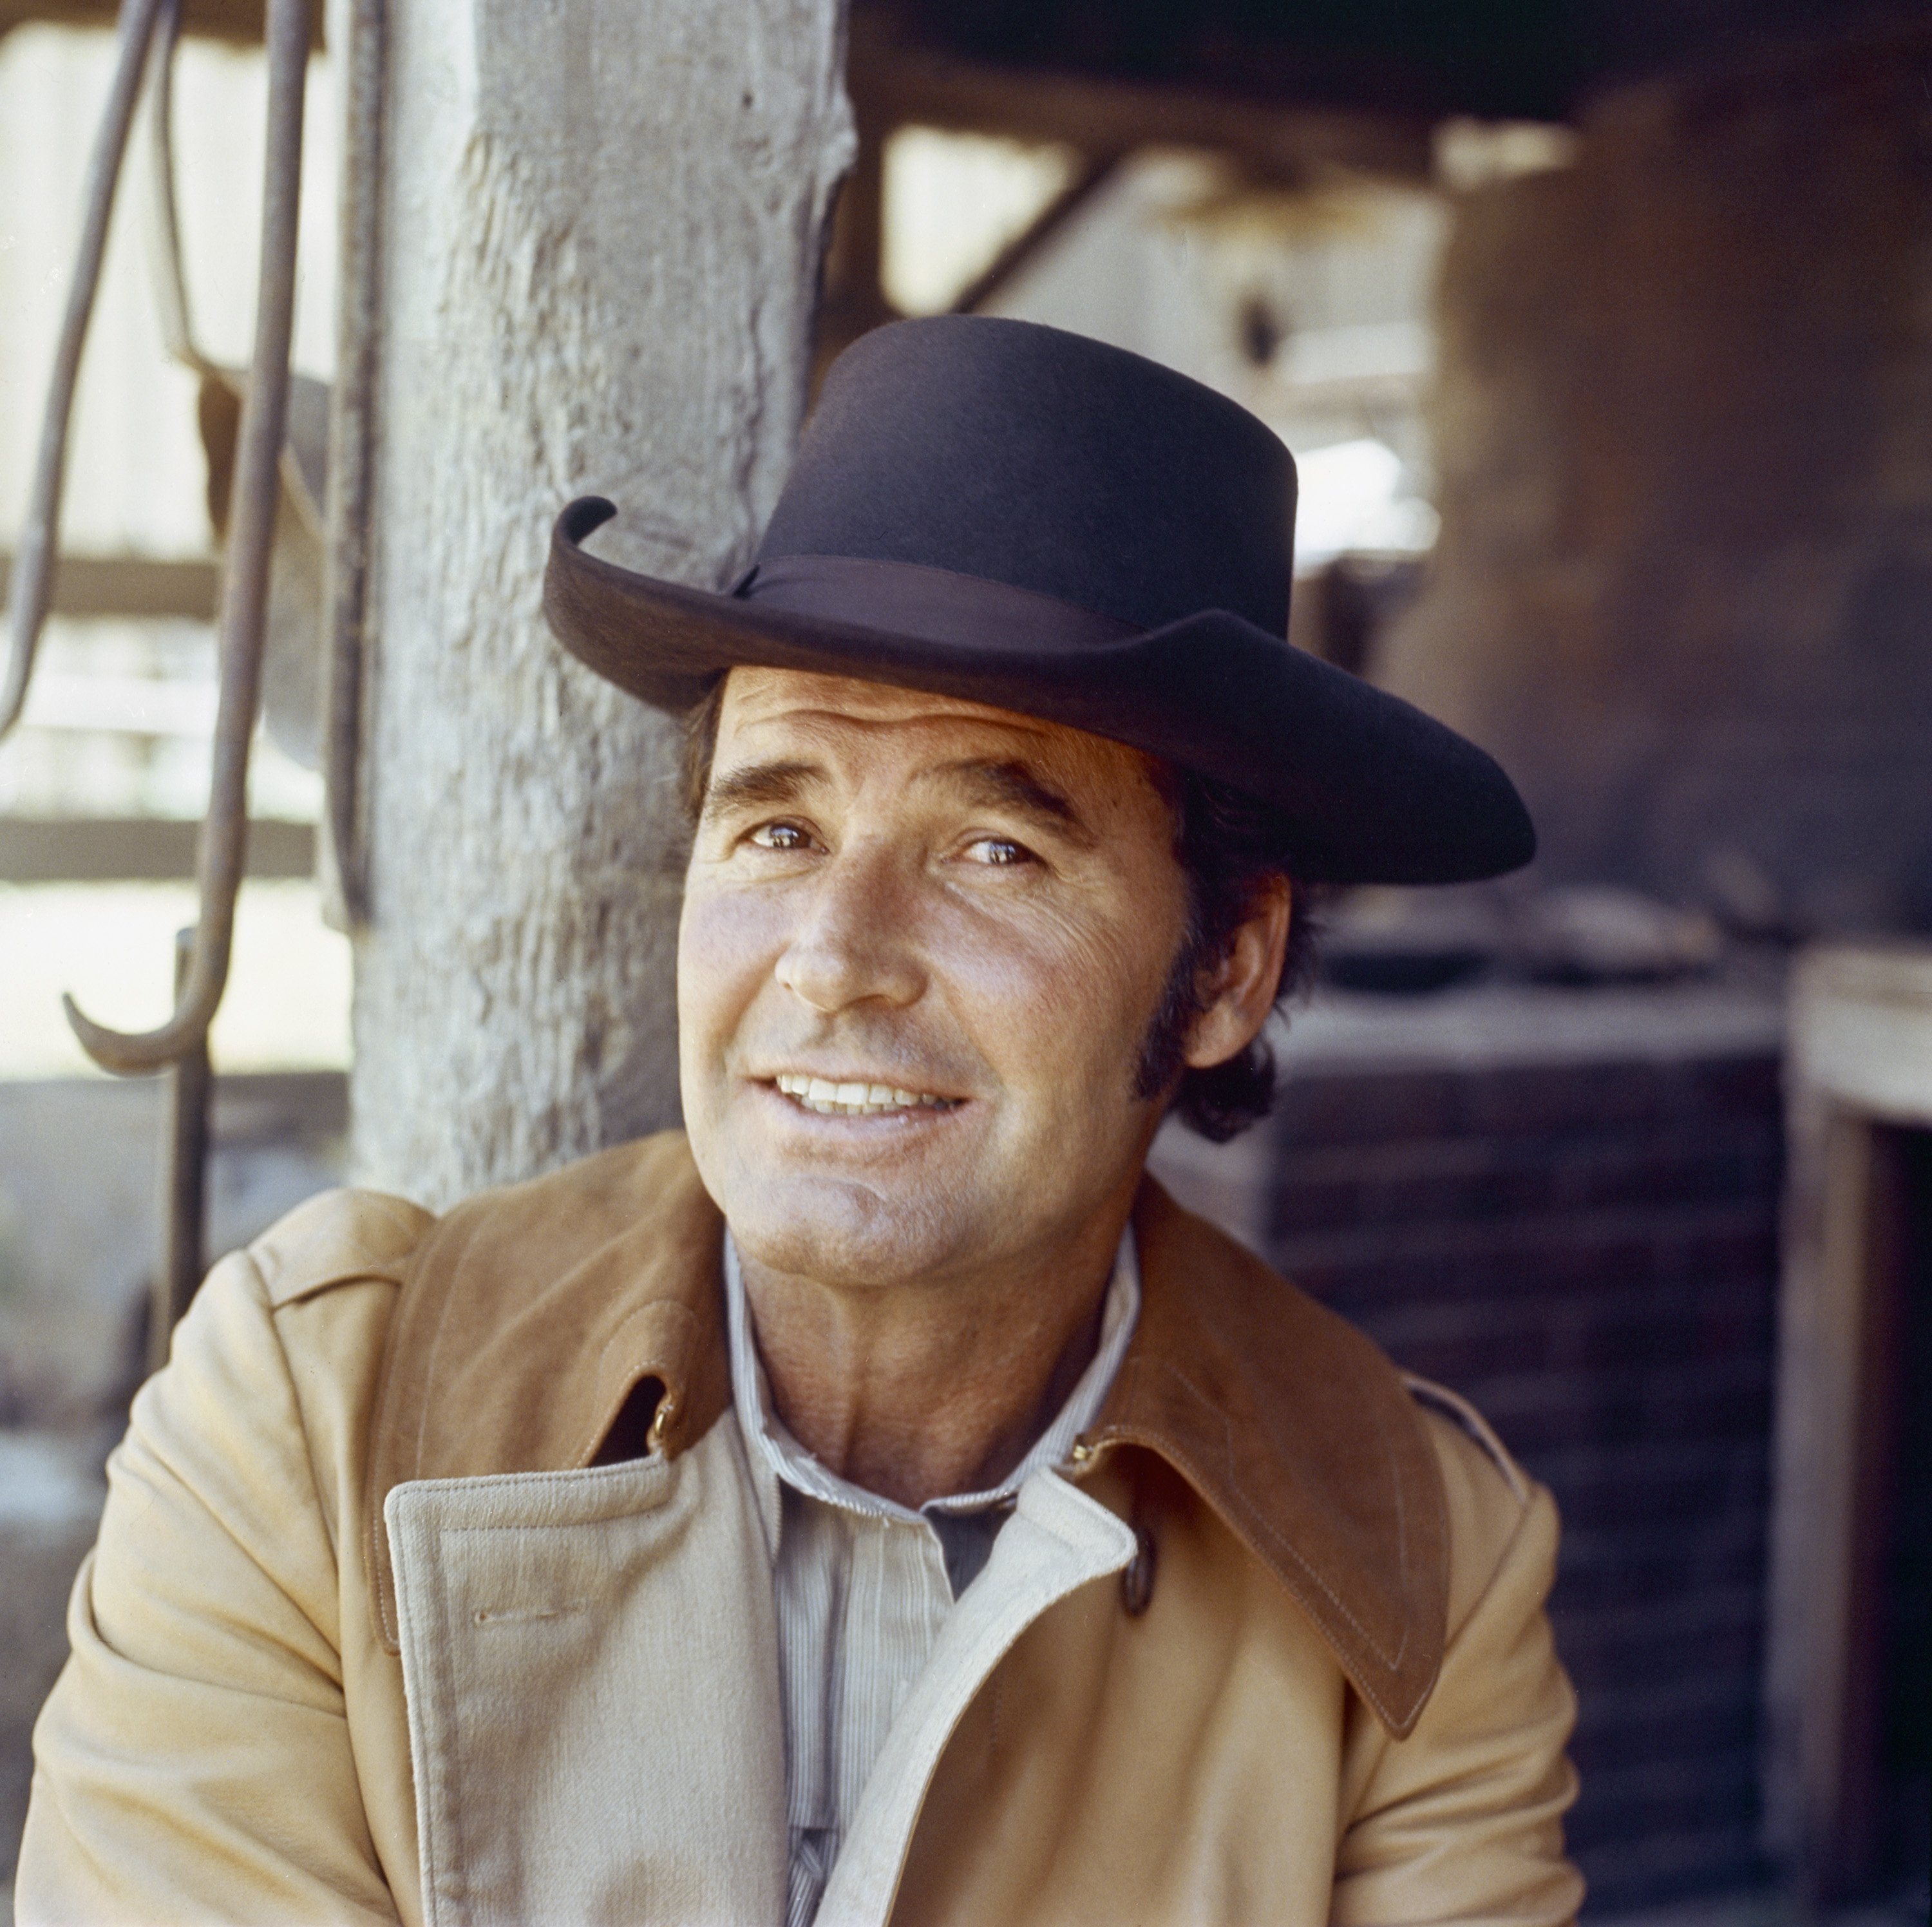 James Garner as Sheriff Jim Nichols in "Nichols" in 1971. | Source: Getty Images